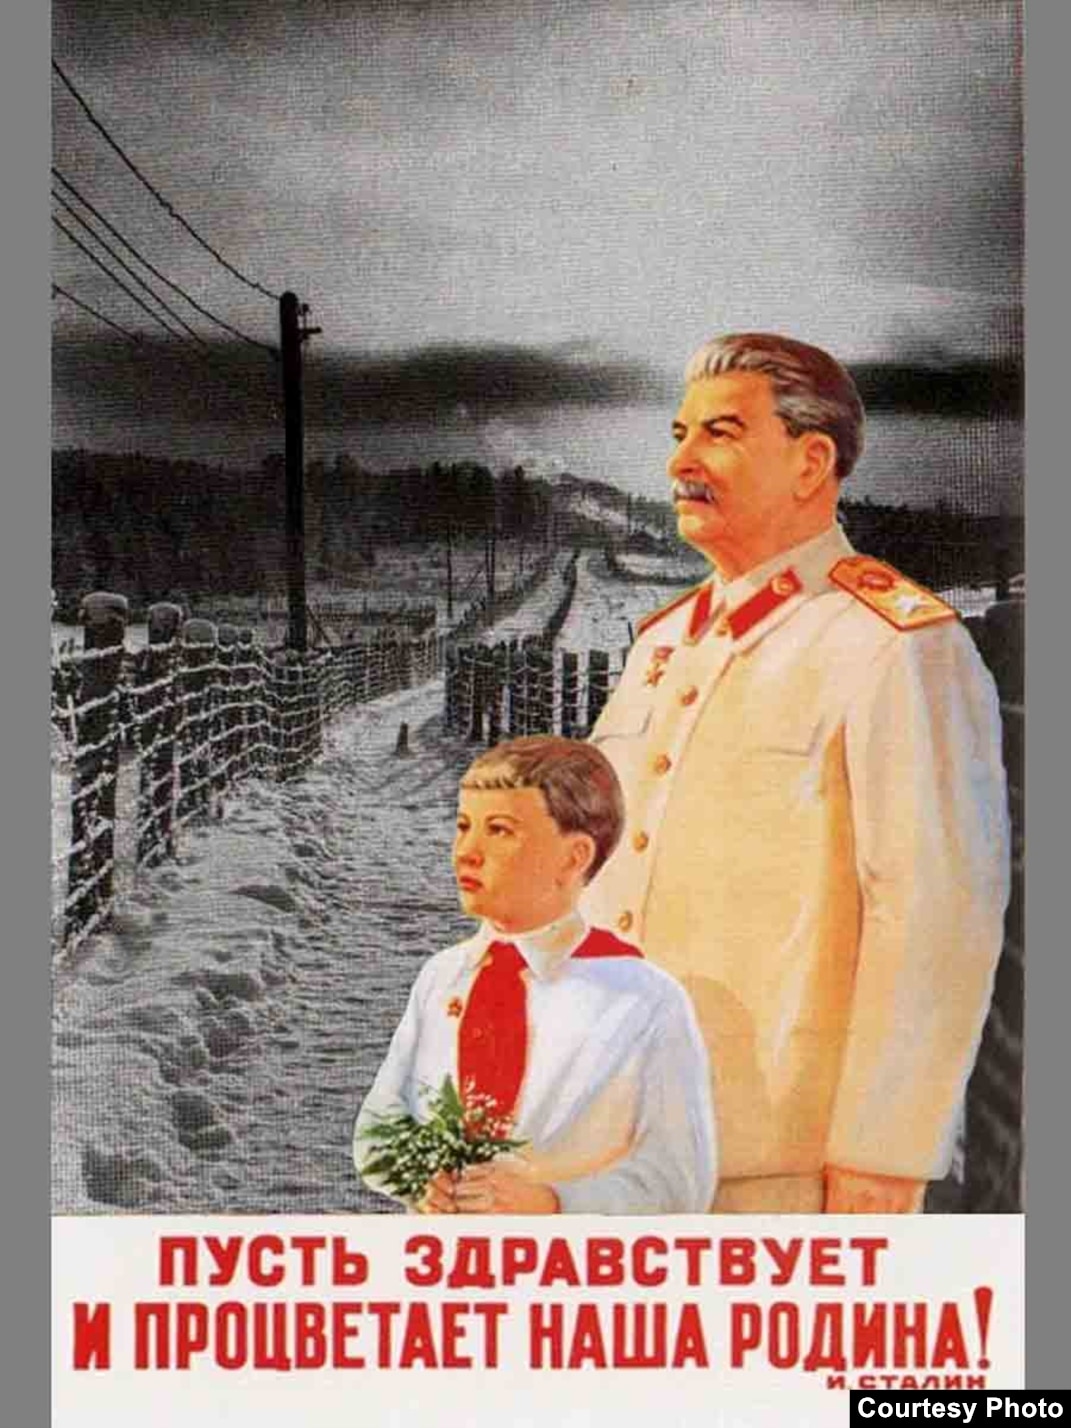 Against Stalin